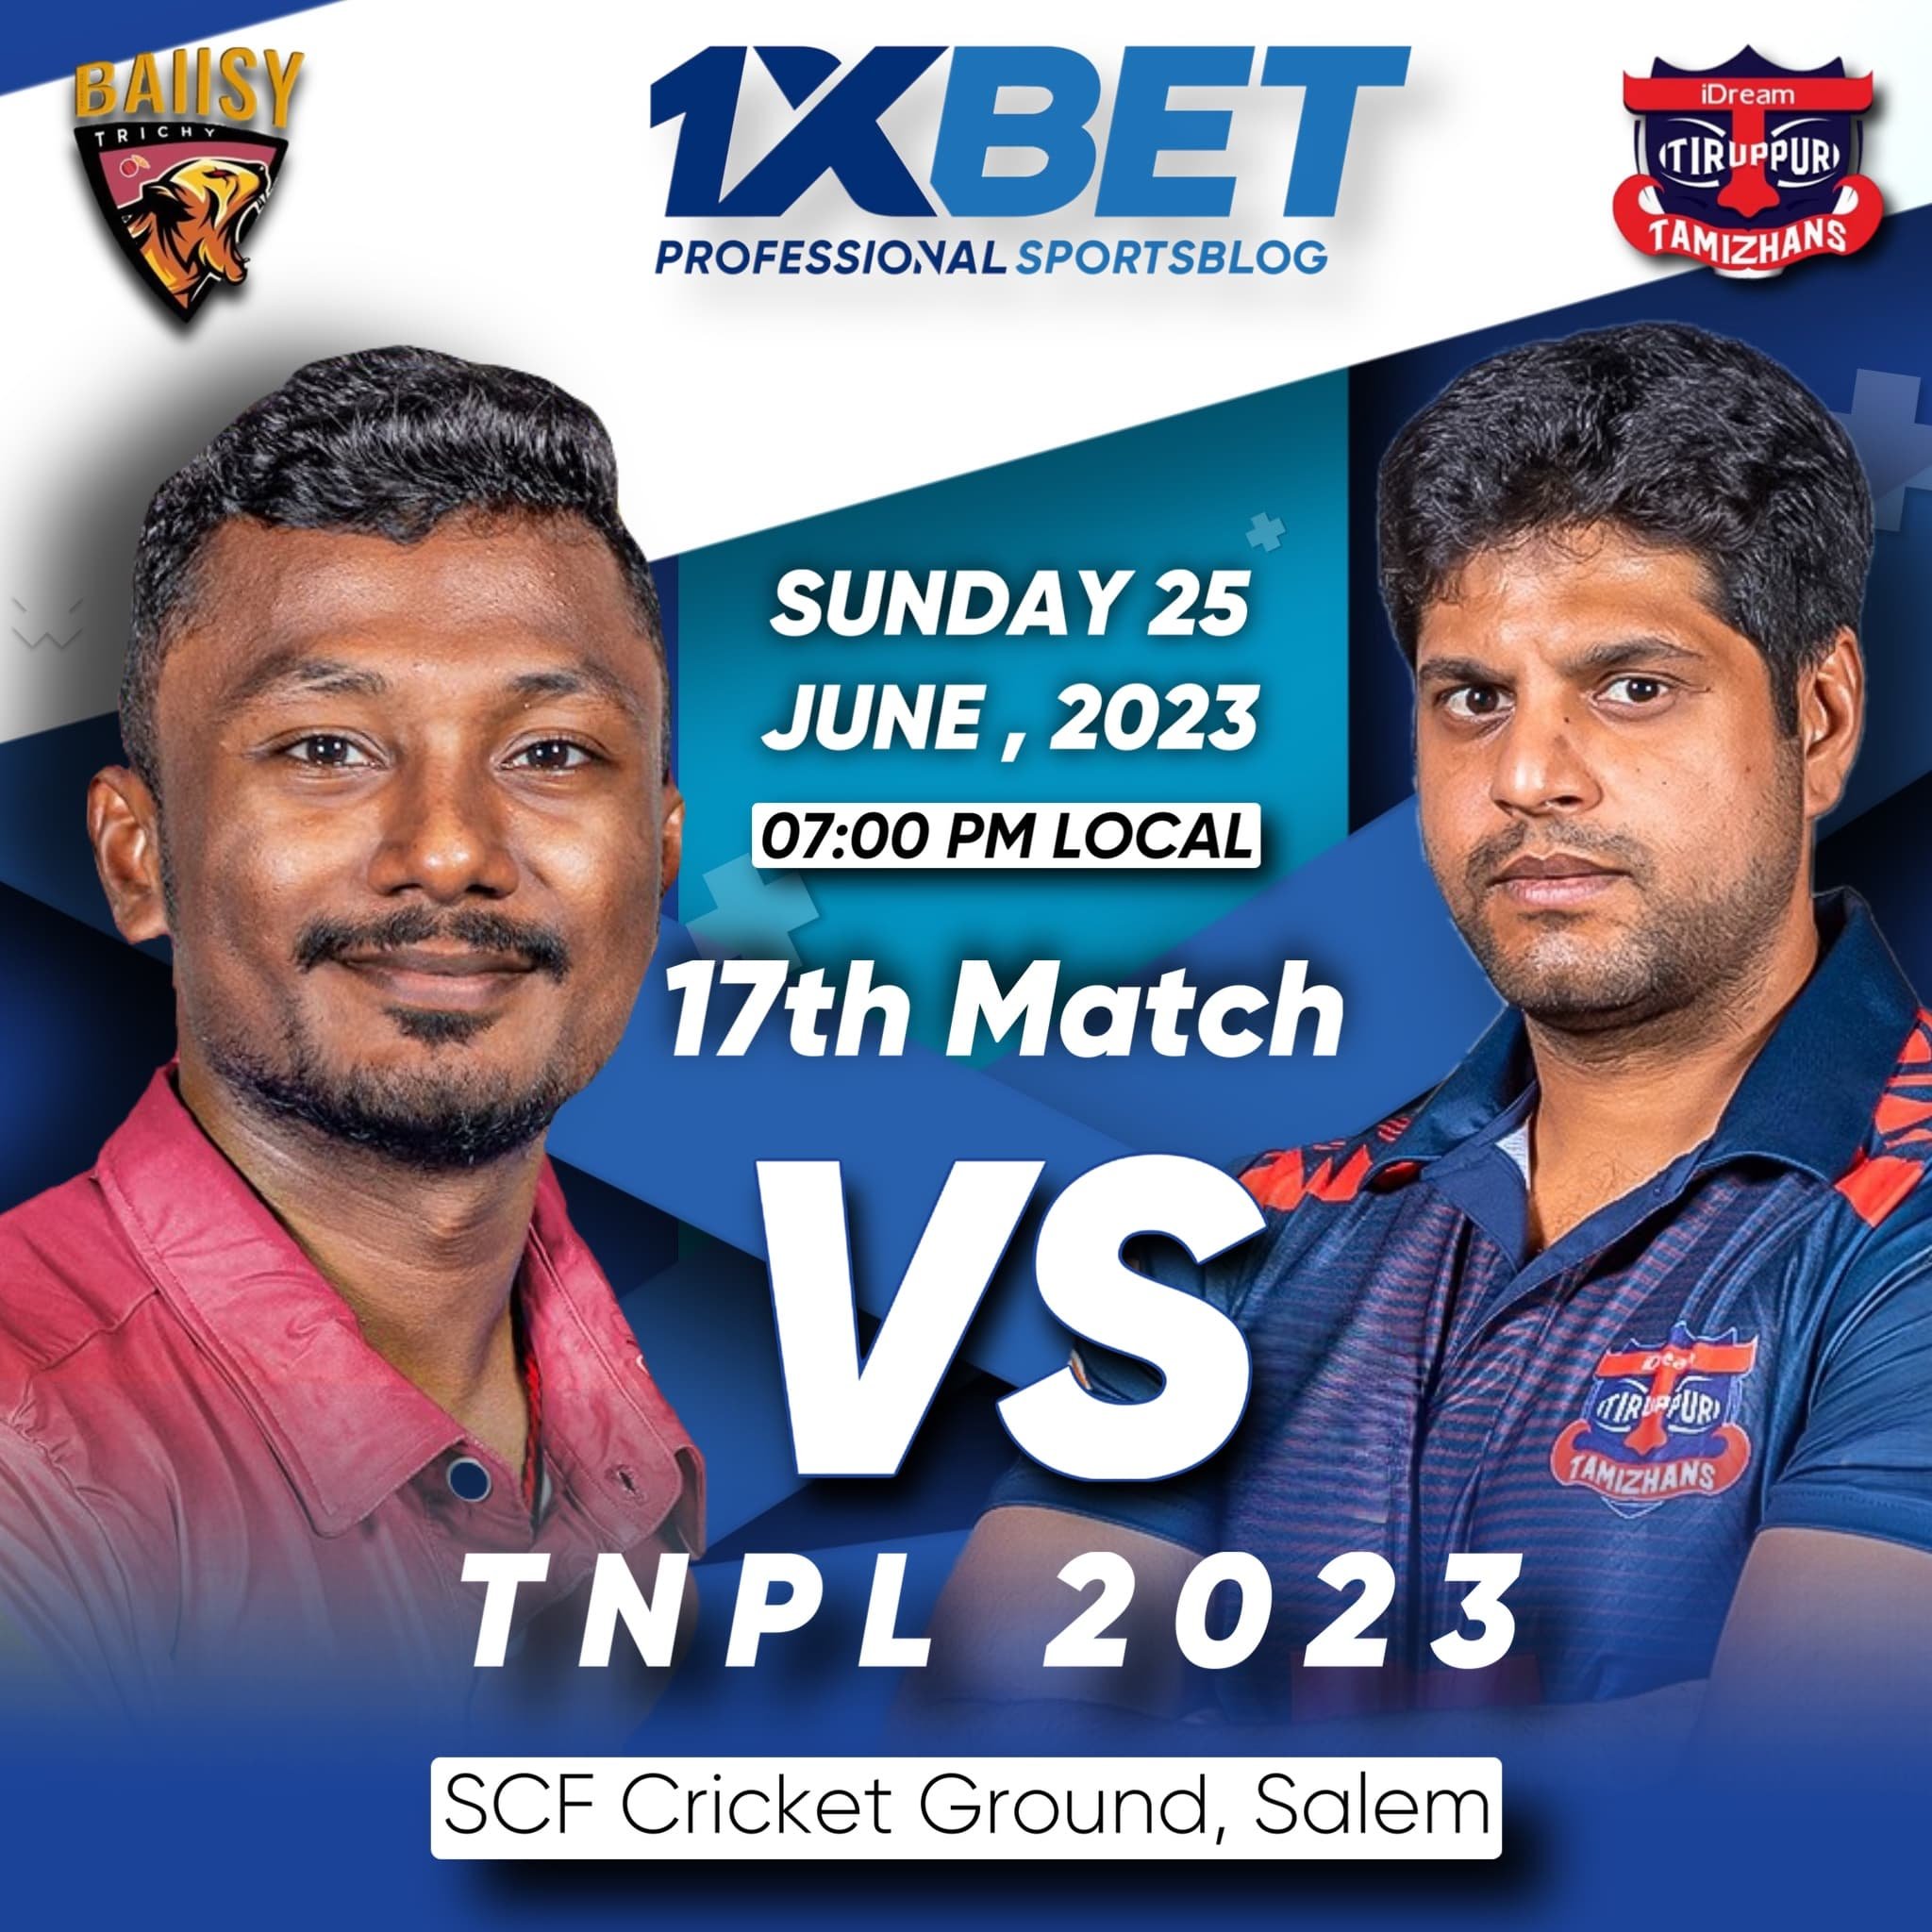 IDream Tiruppur Tamizhans vs Ba11sy Trichy, TNPL 2023, 17th Match Analysis